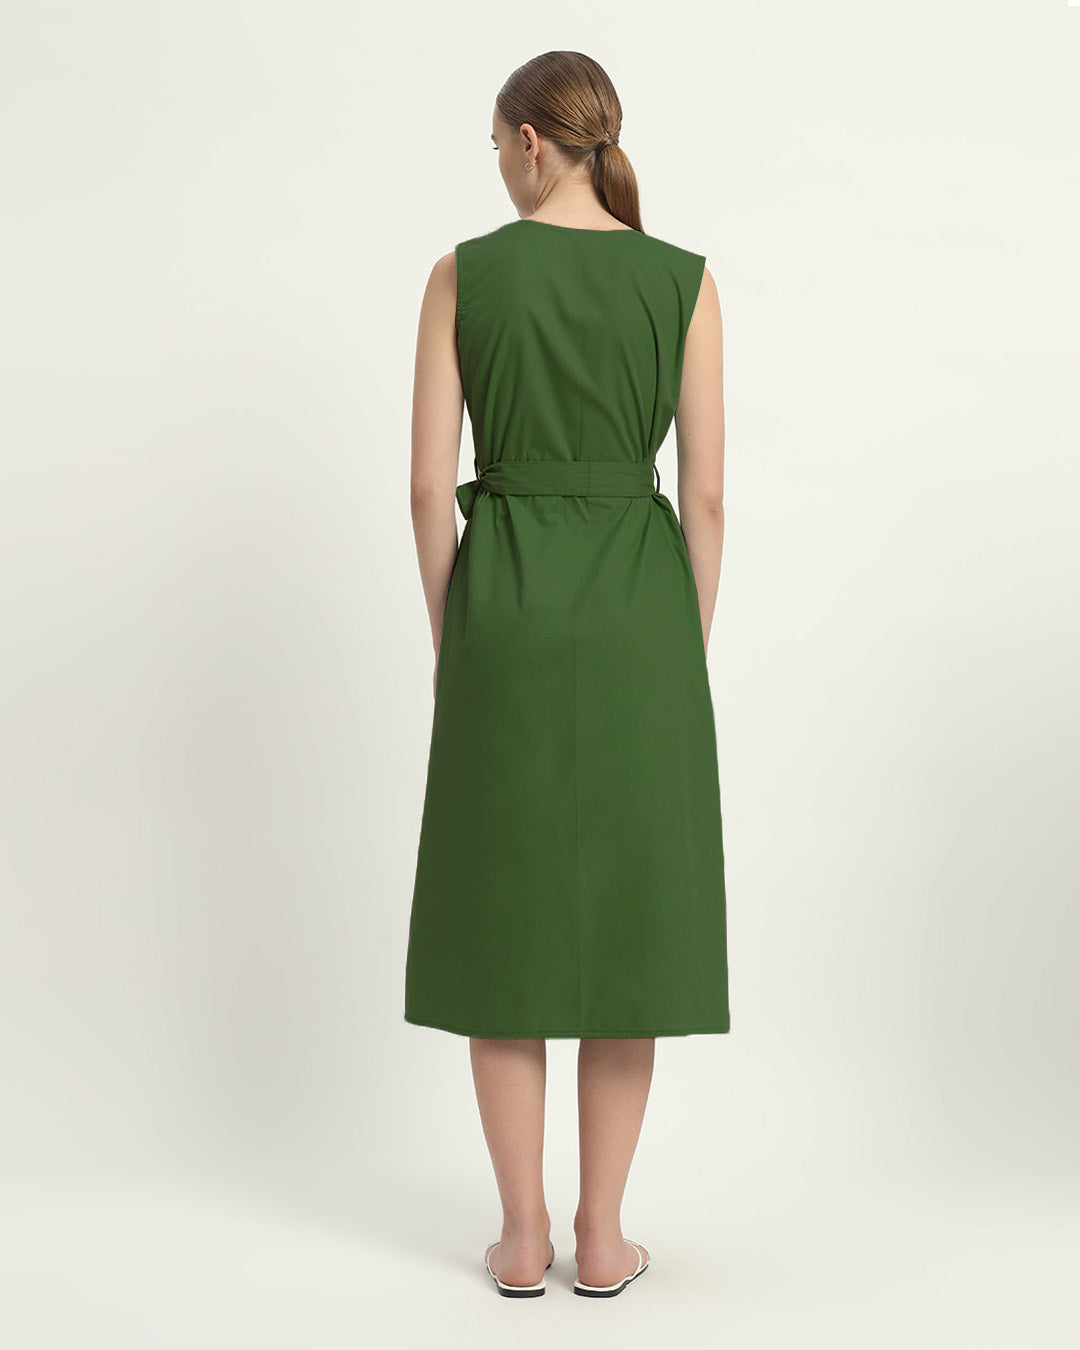 The Emerald Windsor Cotton Dress